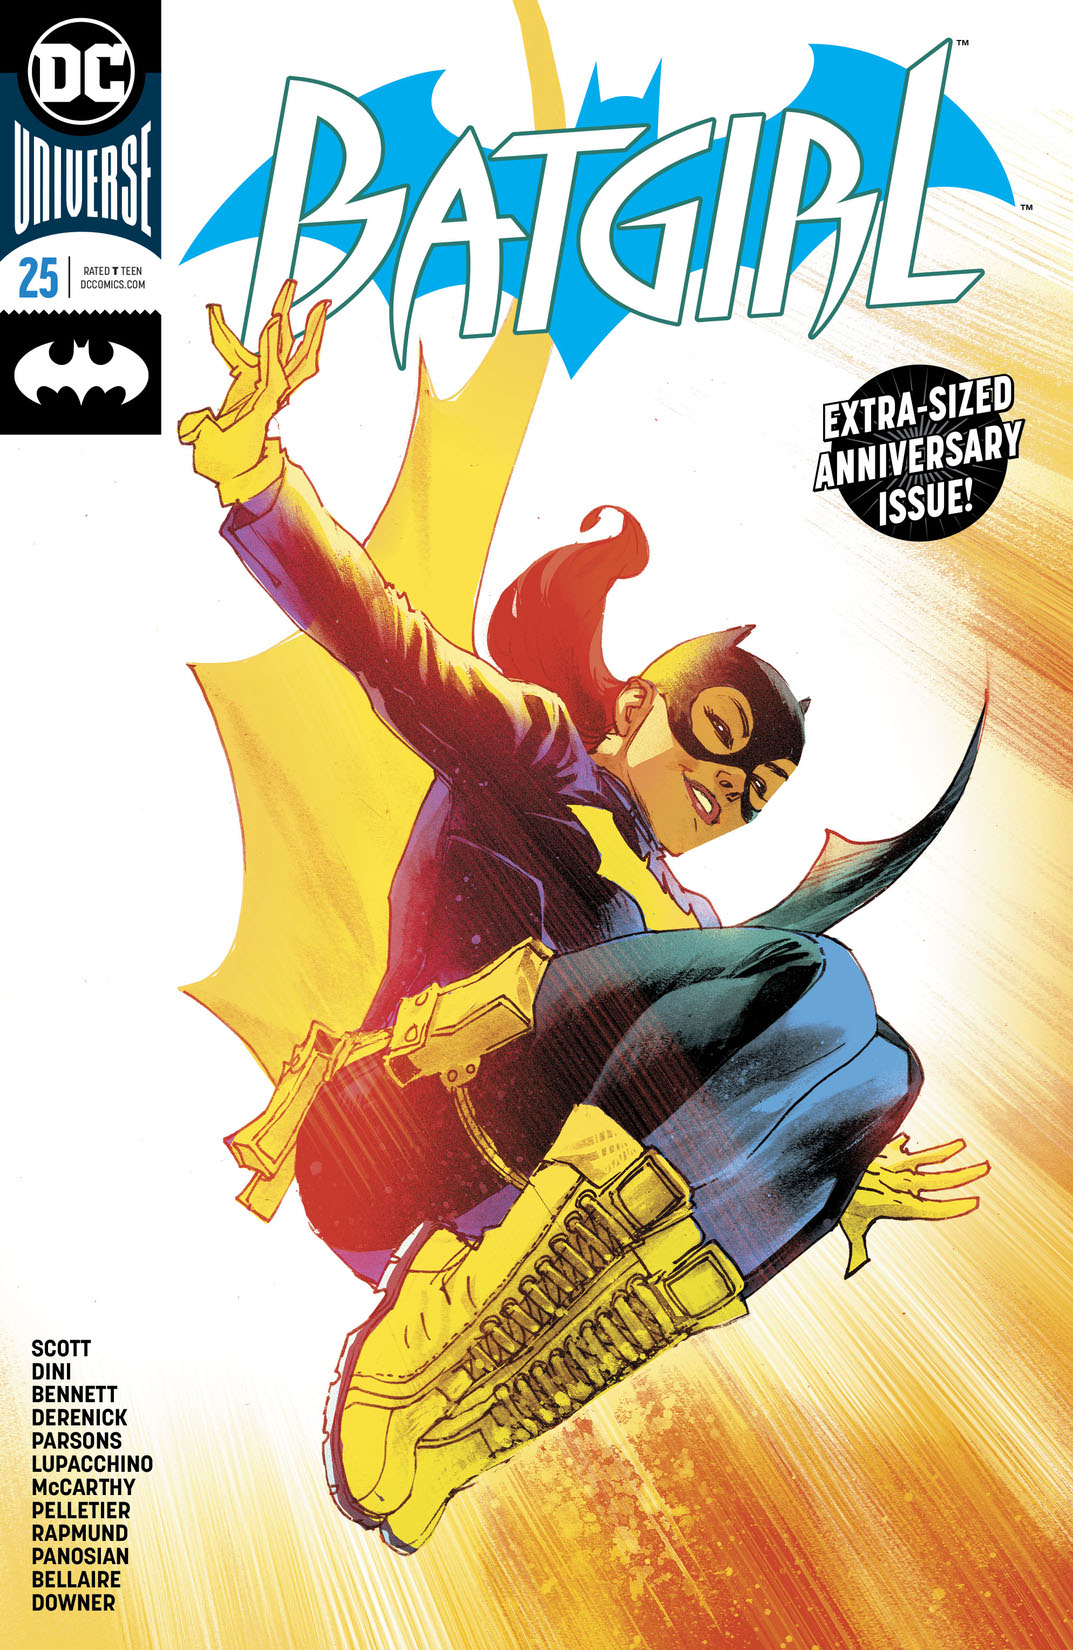 Batgirl (2016-) #25 preview images